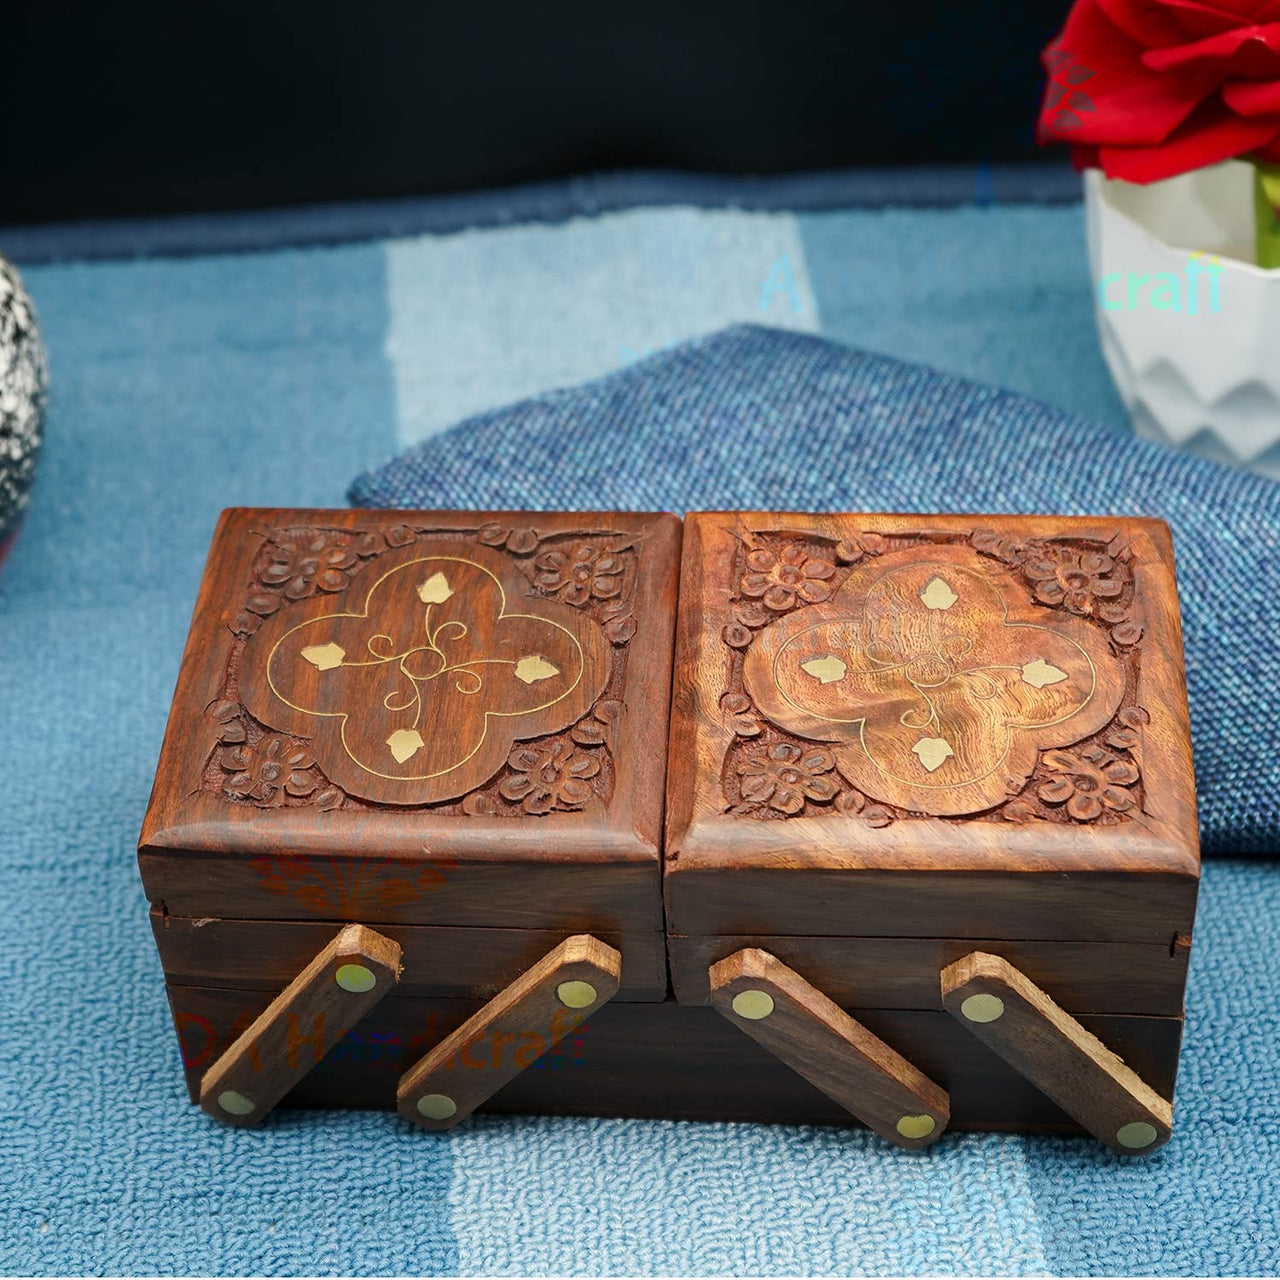 Wooden Folding Handmade Jewellery Box Jewel Boxes Storage Box Organizer Gift Box for Women Necklace Earring Set Bangles Churi Holder Dime Store